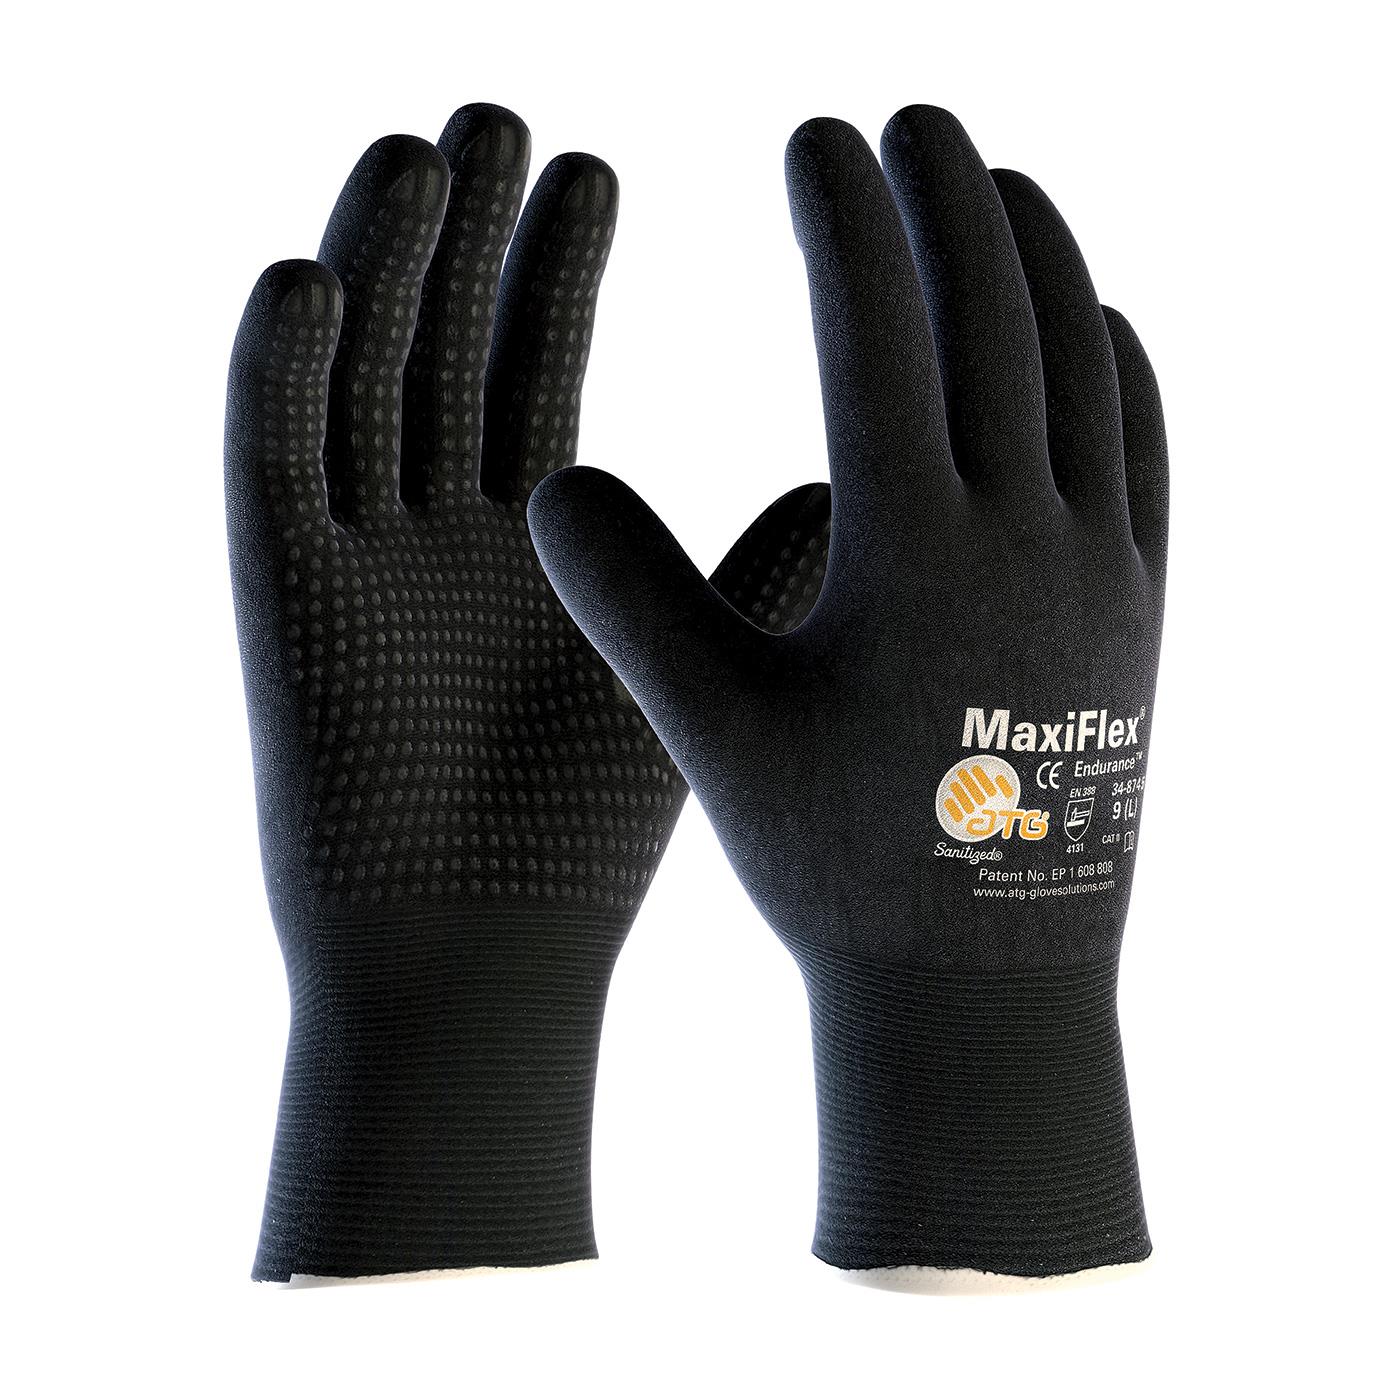 MAXIFLEX ENDURANCE FULL COAT MICRO DOTS - Nitrile Coated Gloves